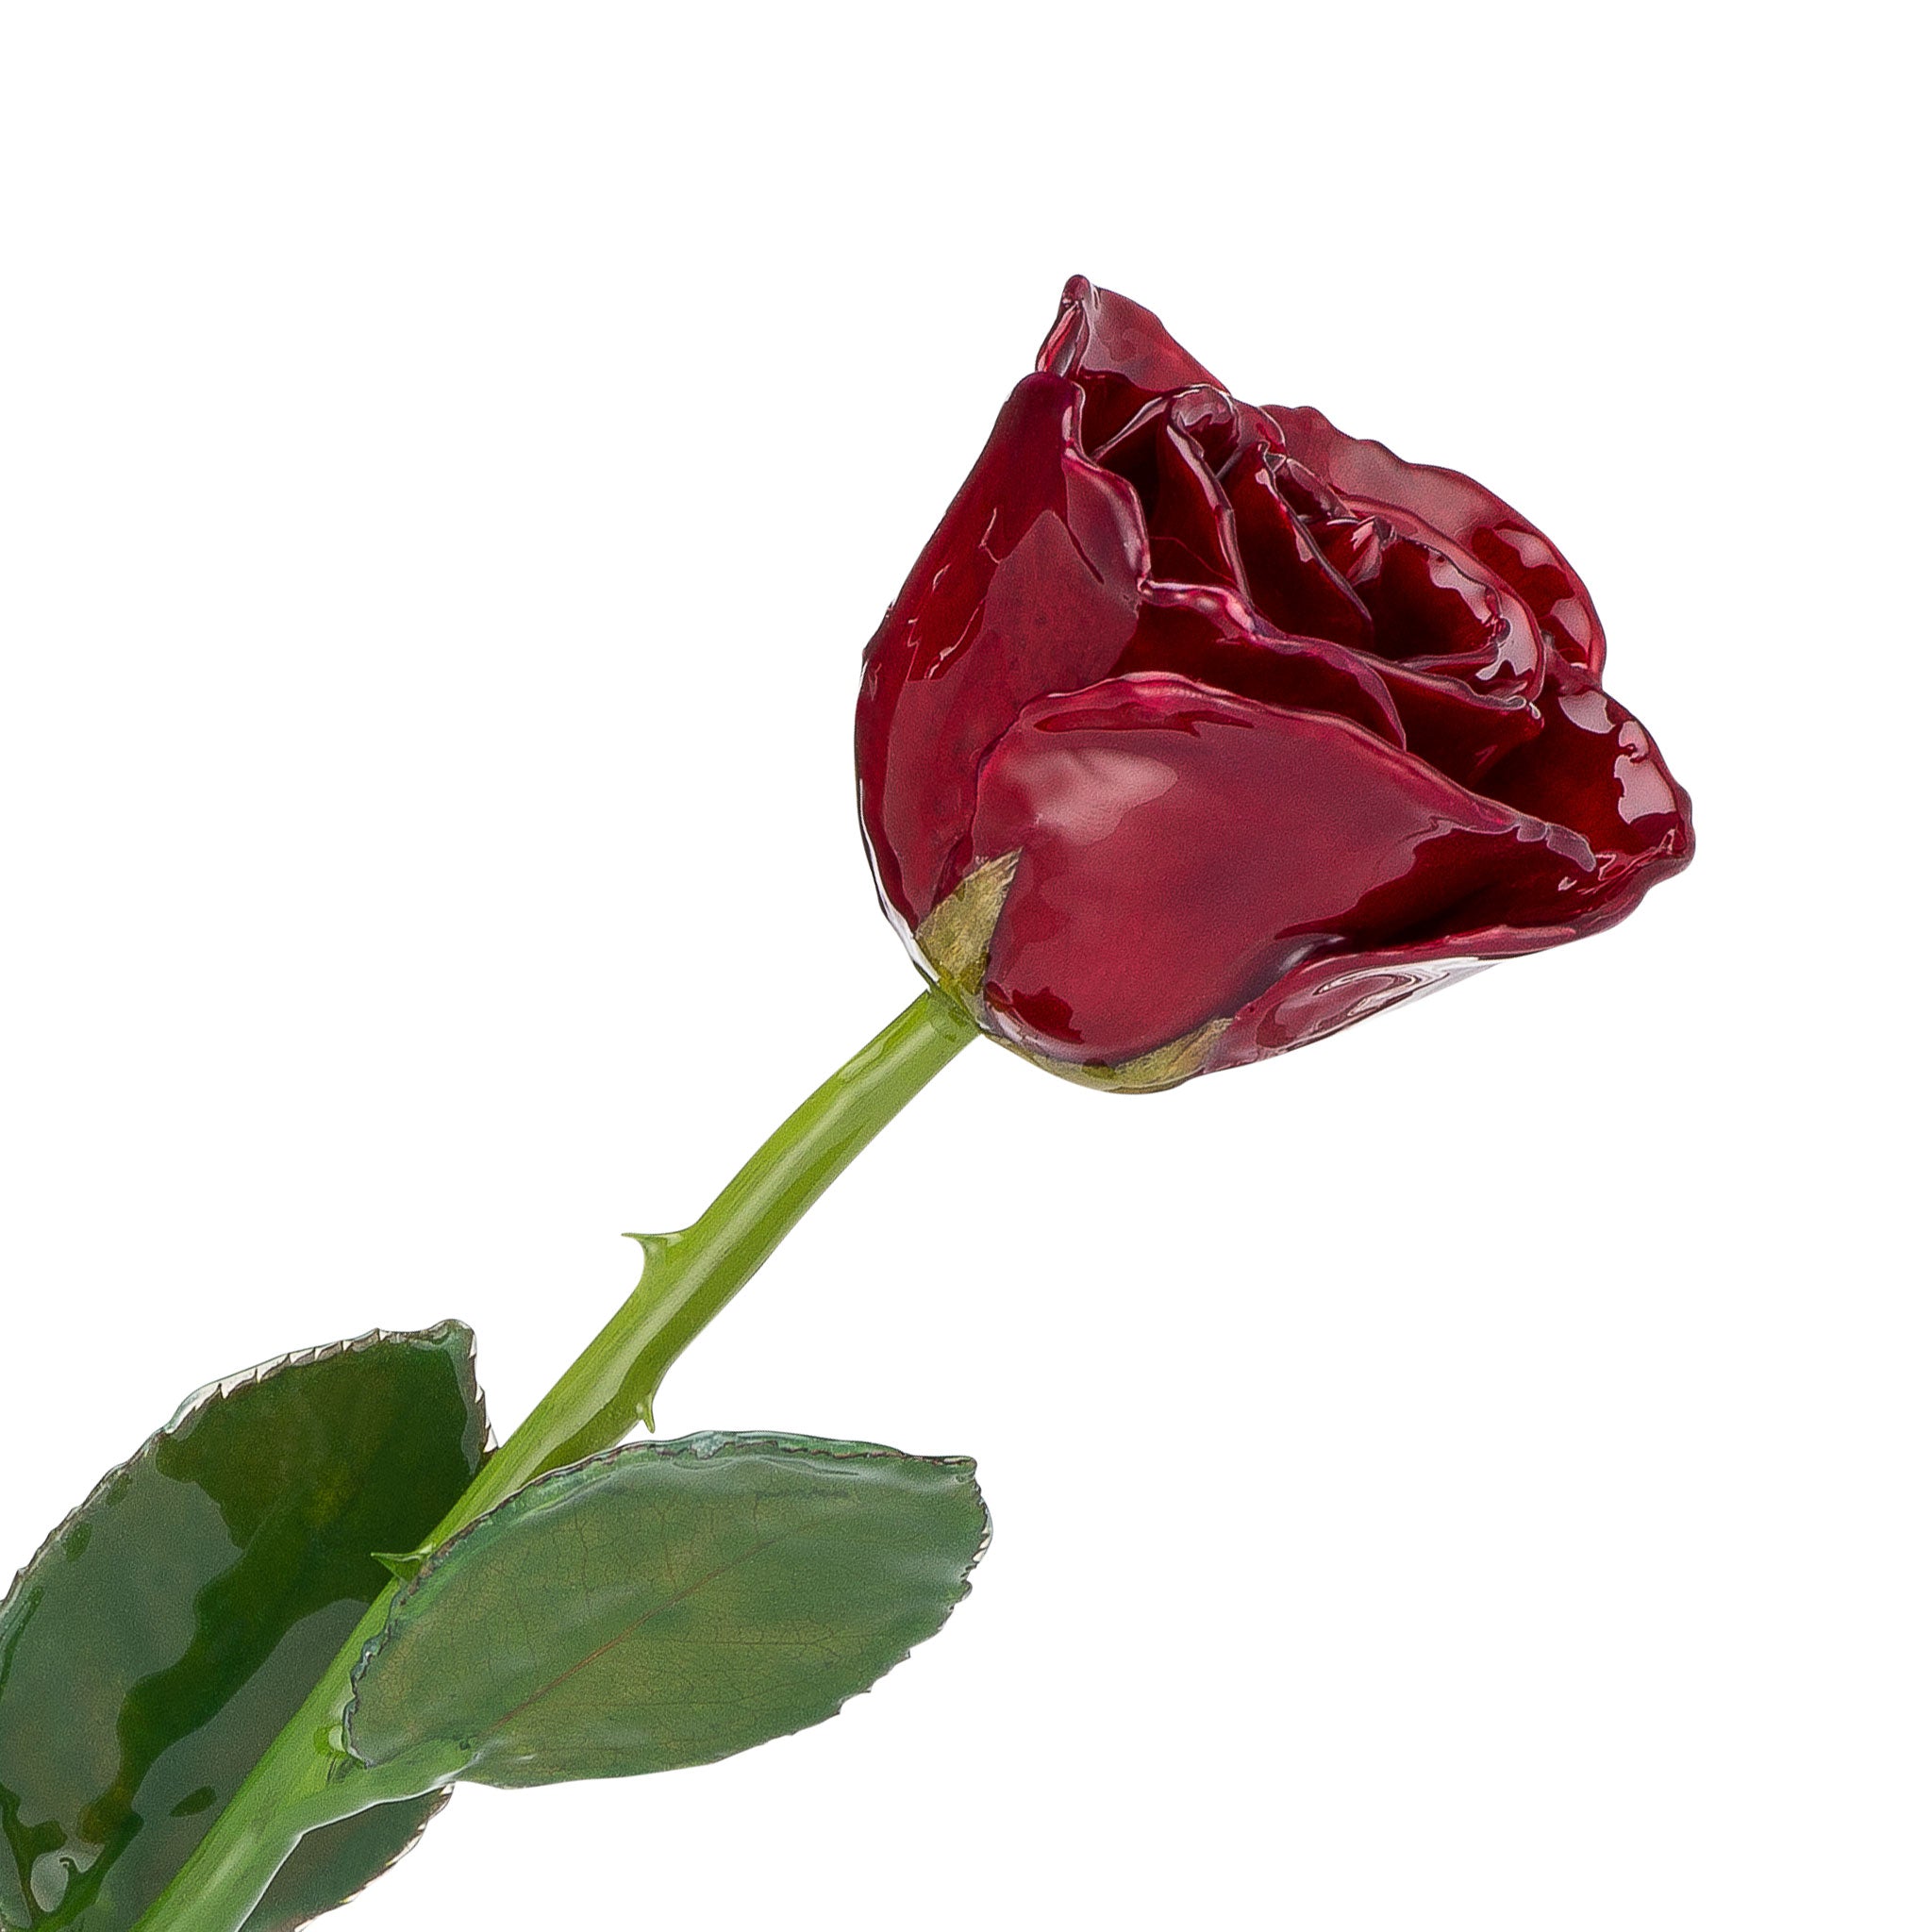 Natural Forever Rose - Red - The Forever Rose